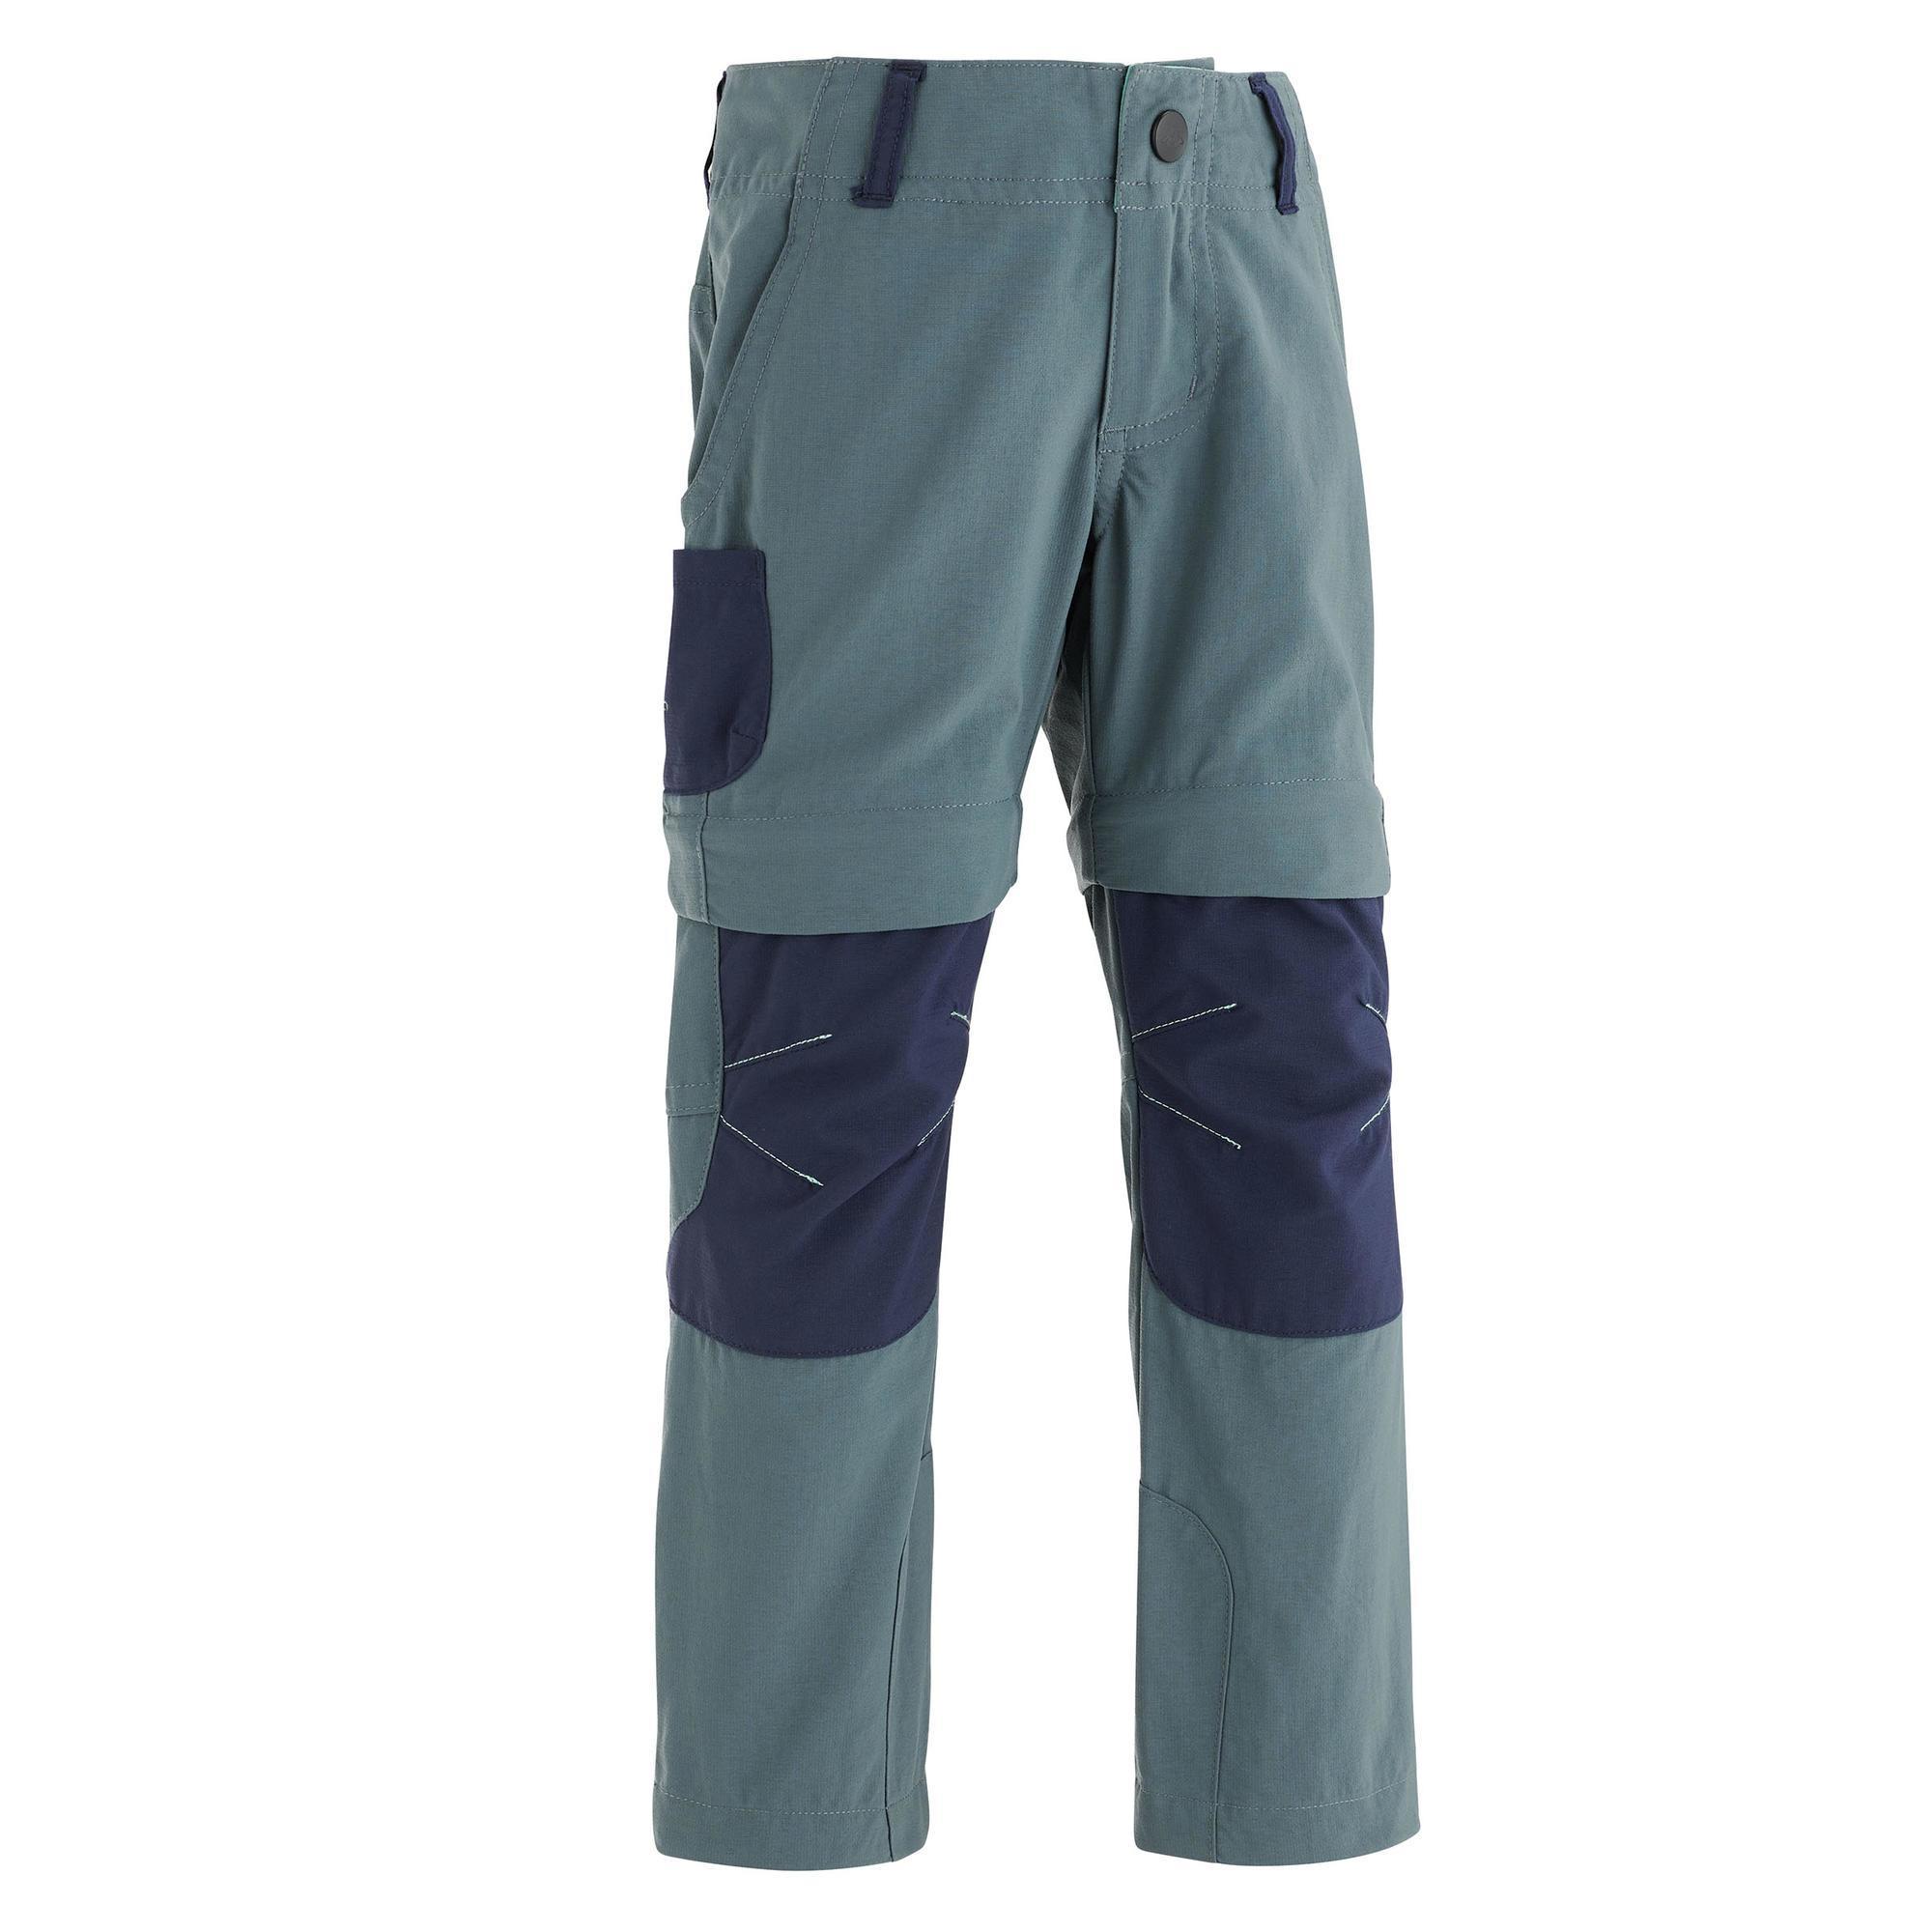 Pantalon Modulabil Drumeție la munte MH500 Gri-Albastru Fete 2-6 ani 2-6  Imbracaminte trekking si drumetie